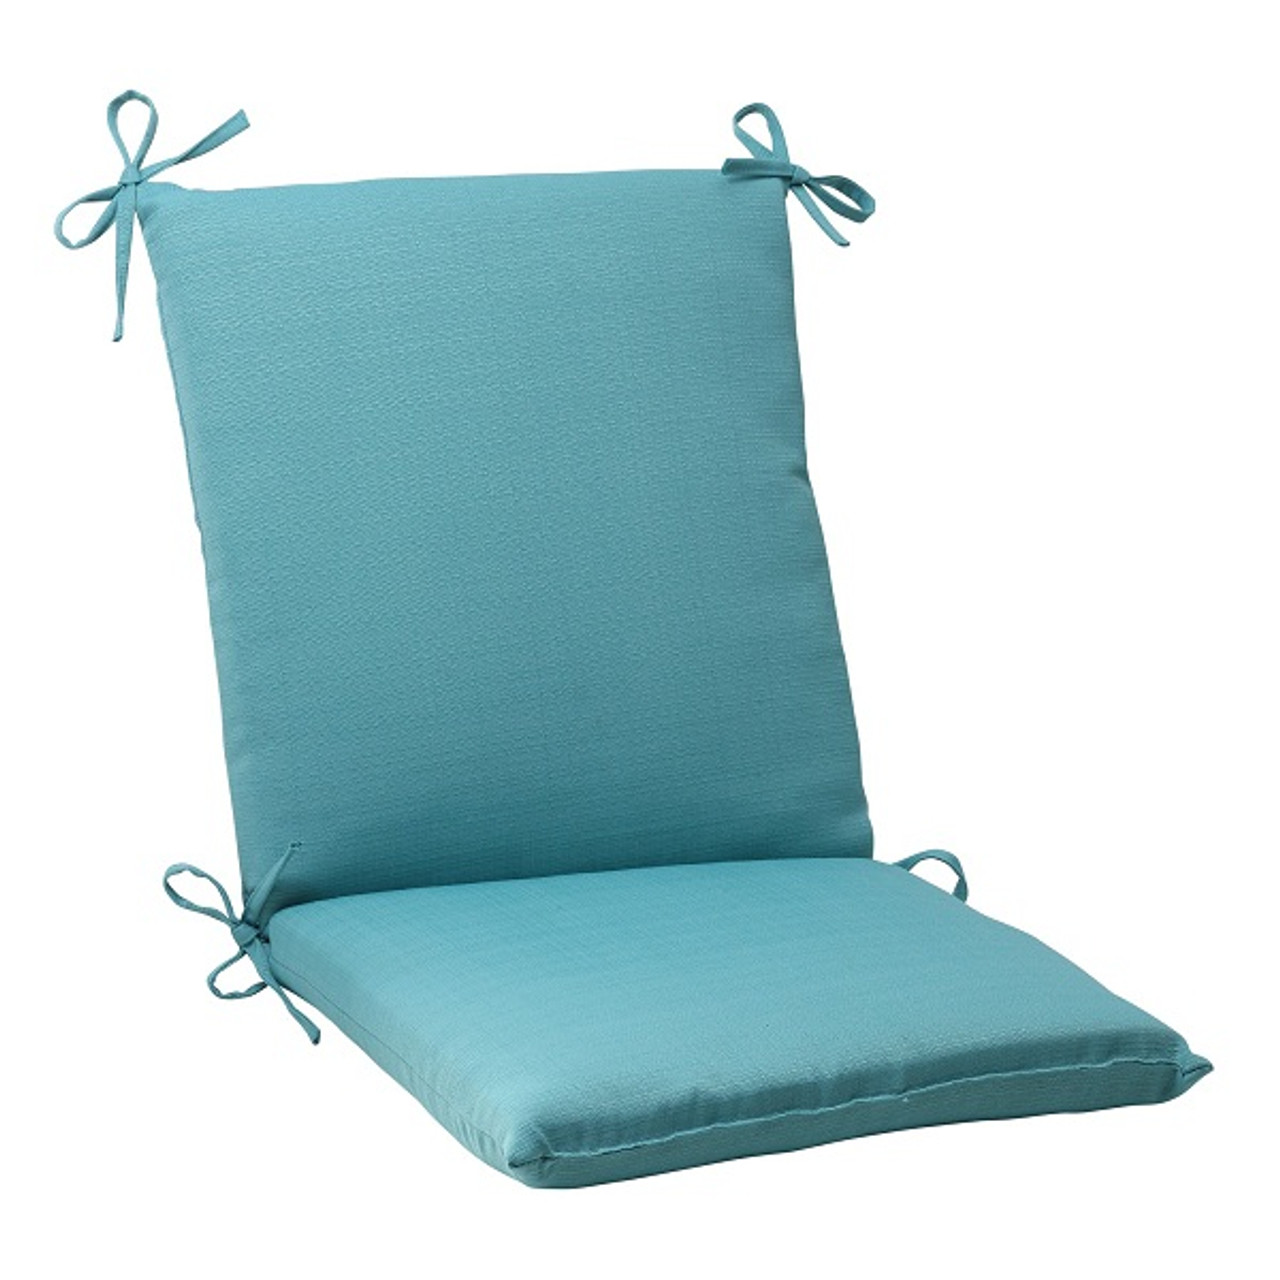 18” x 36.5” Ummi Outdoor Patio Square Wicker Chair Cushion 